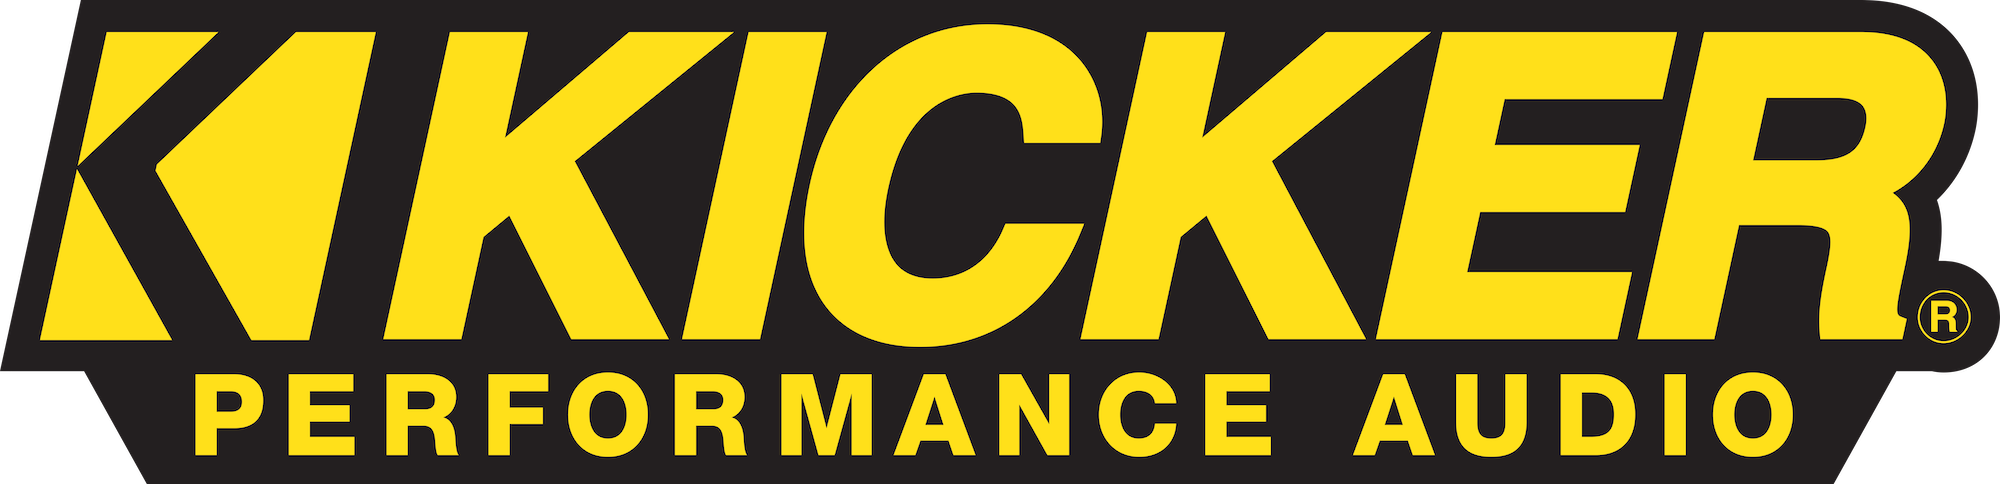 Kicker_Performance_Audio_PNG (1)